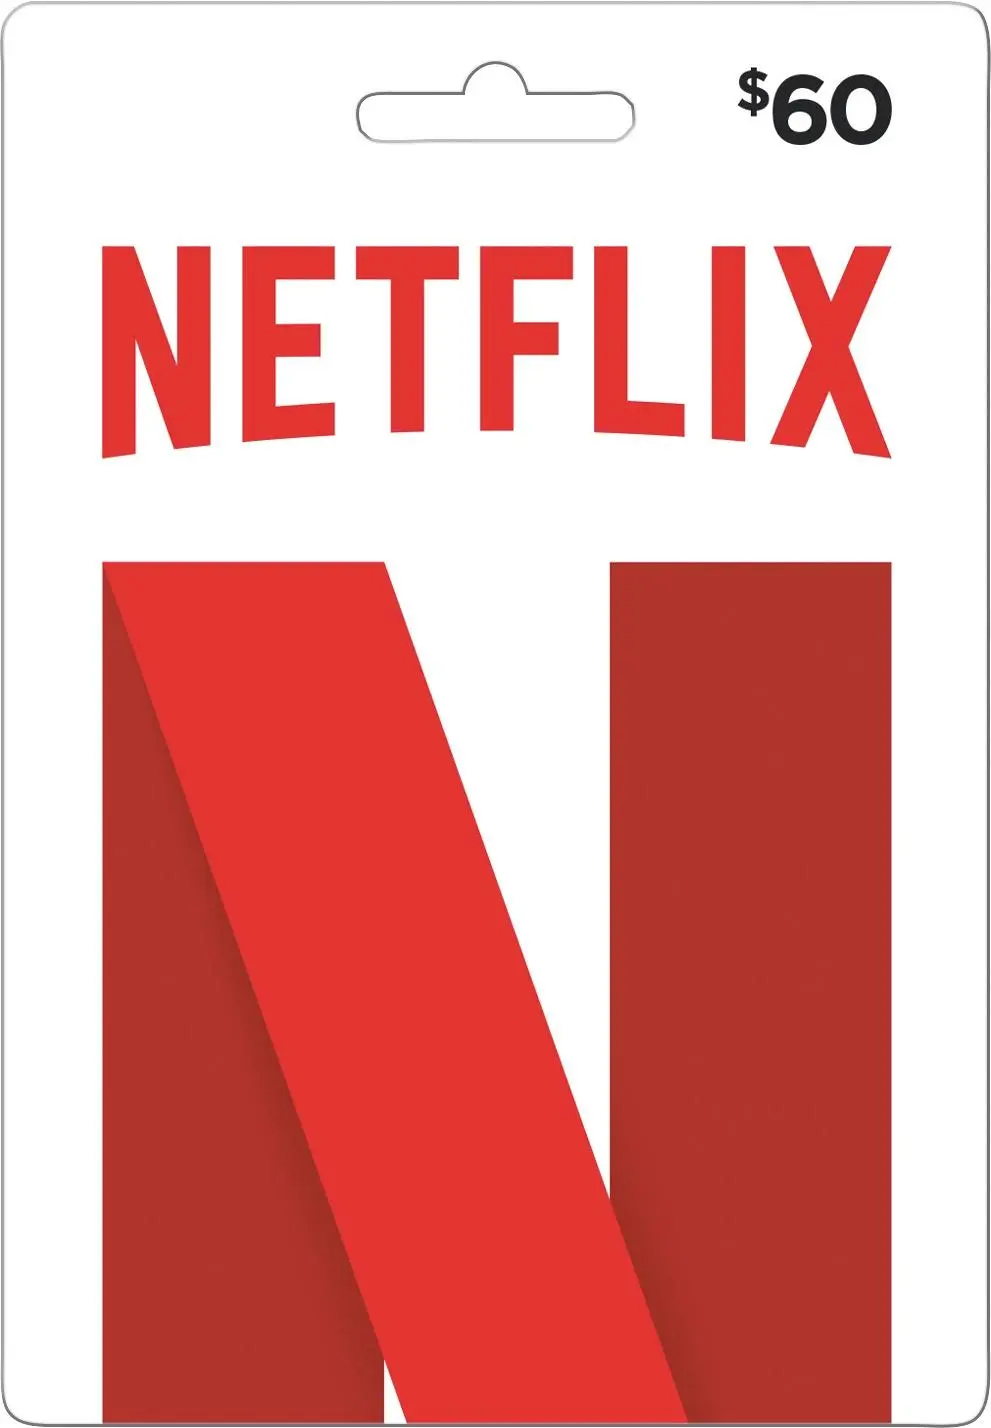 Netflix $60 Gift Card (US) - Digital Code